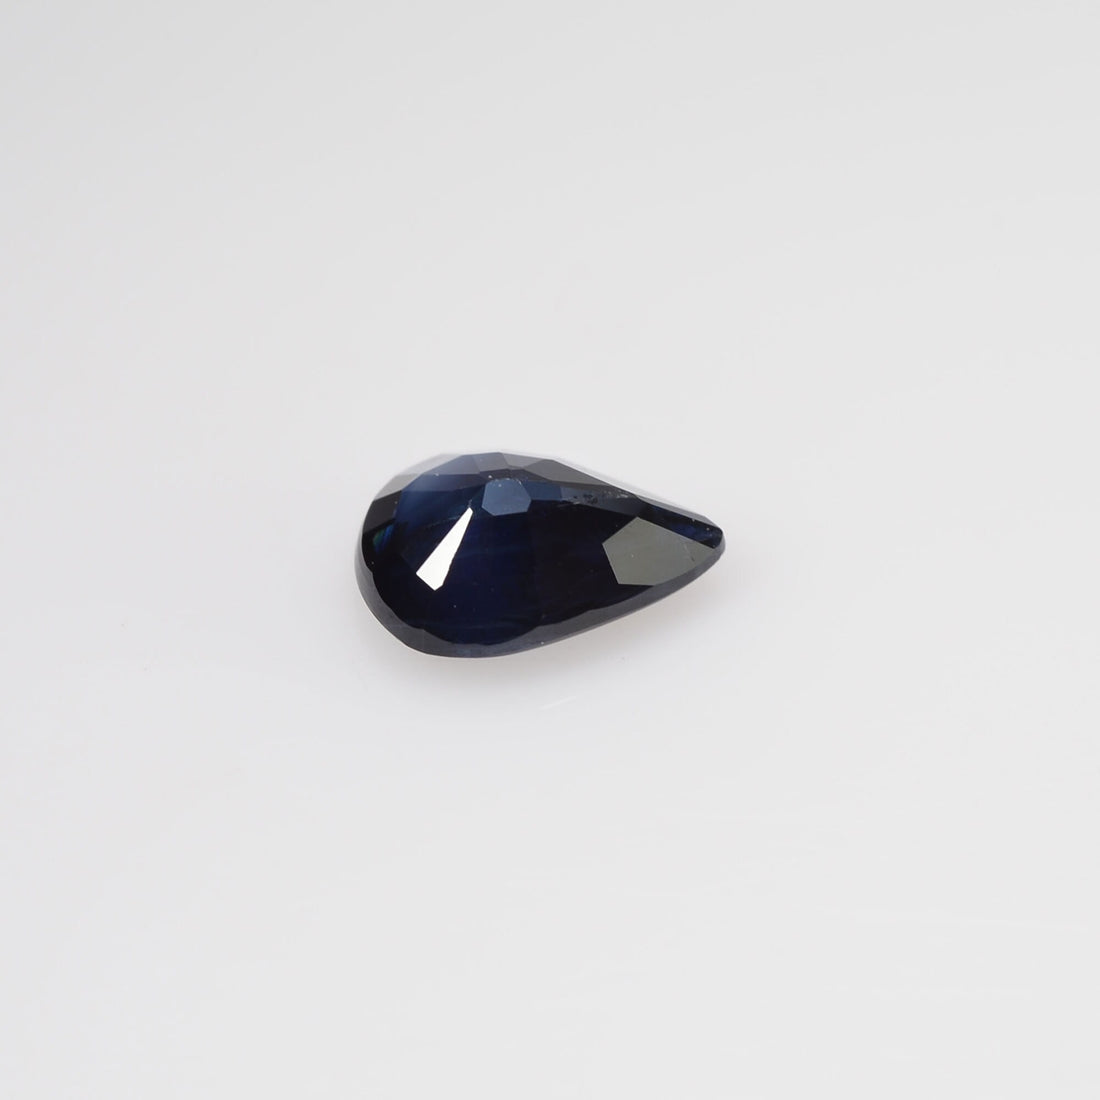 0.70 cts Natural Blue Sapphire Loose Gemstone Pear Cut